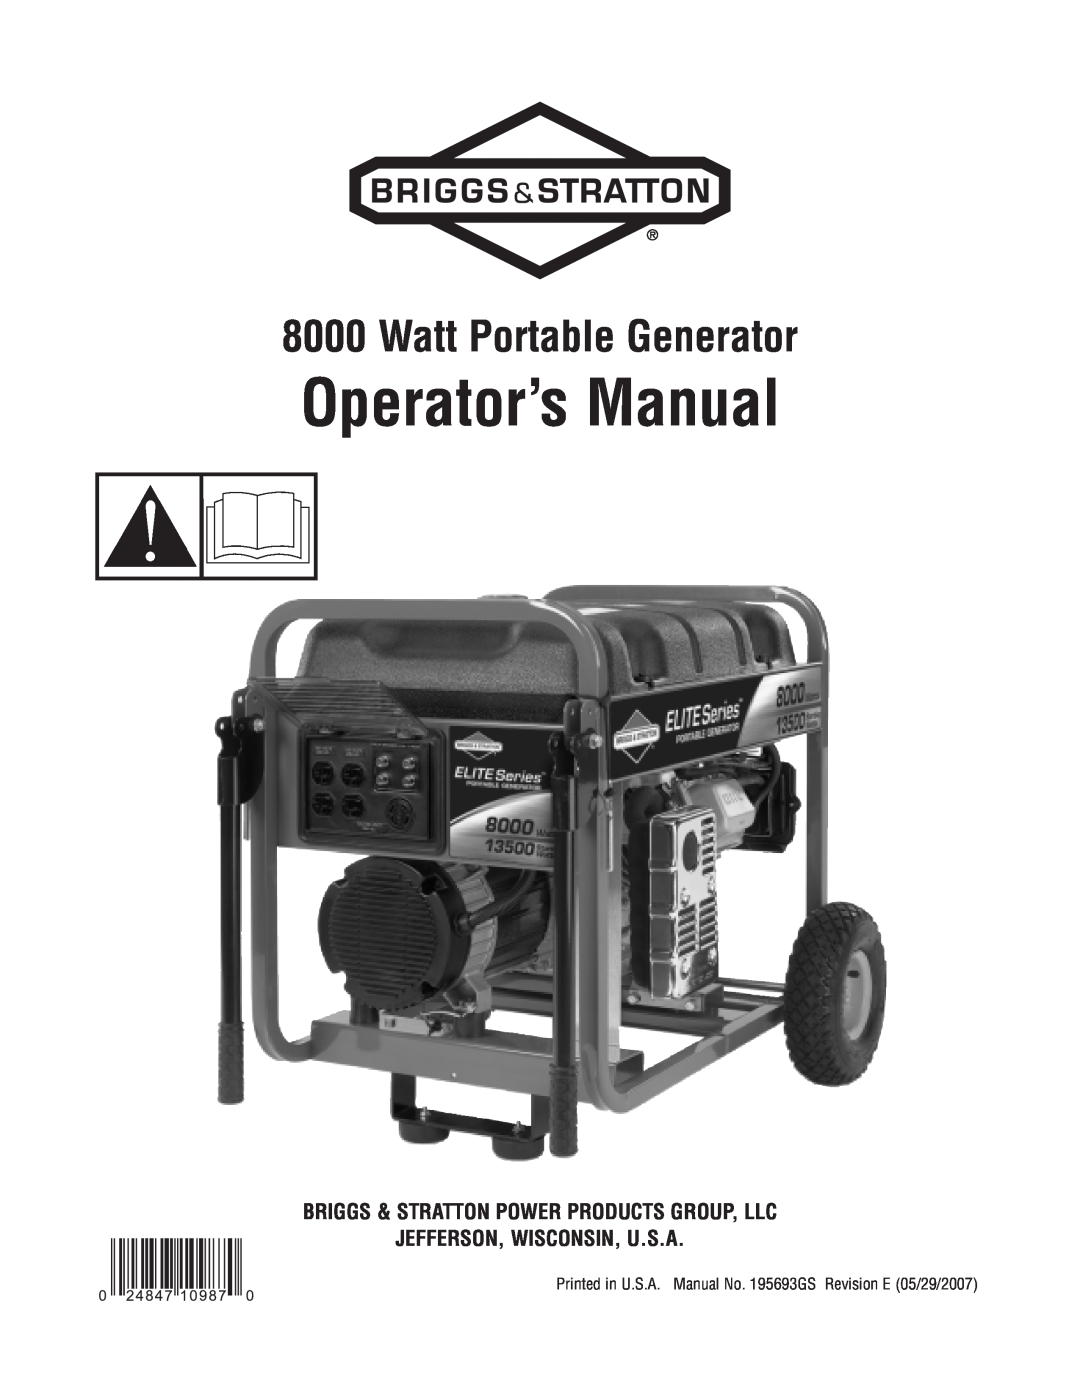 Briggs & Stratton 13500 manual Watt Portable Generator, Operator’s Manual 